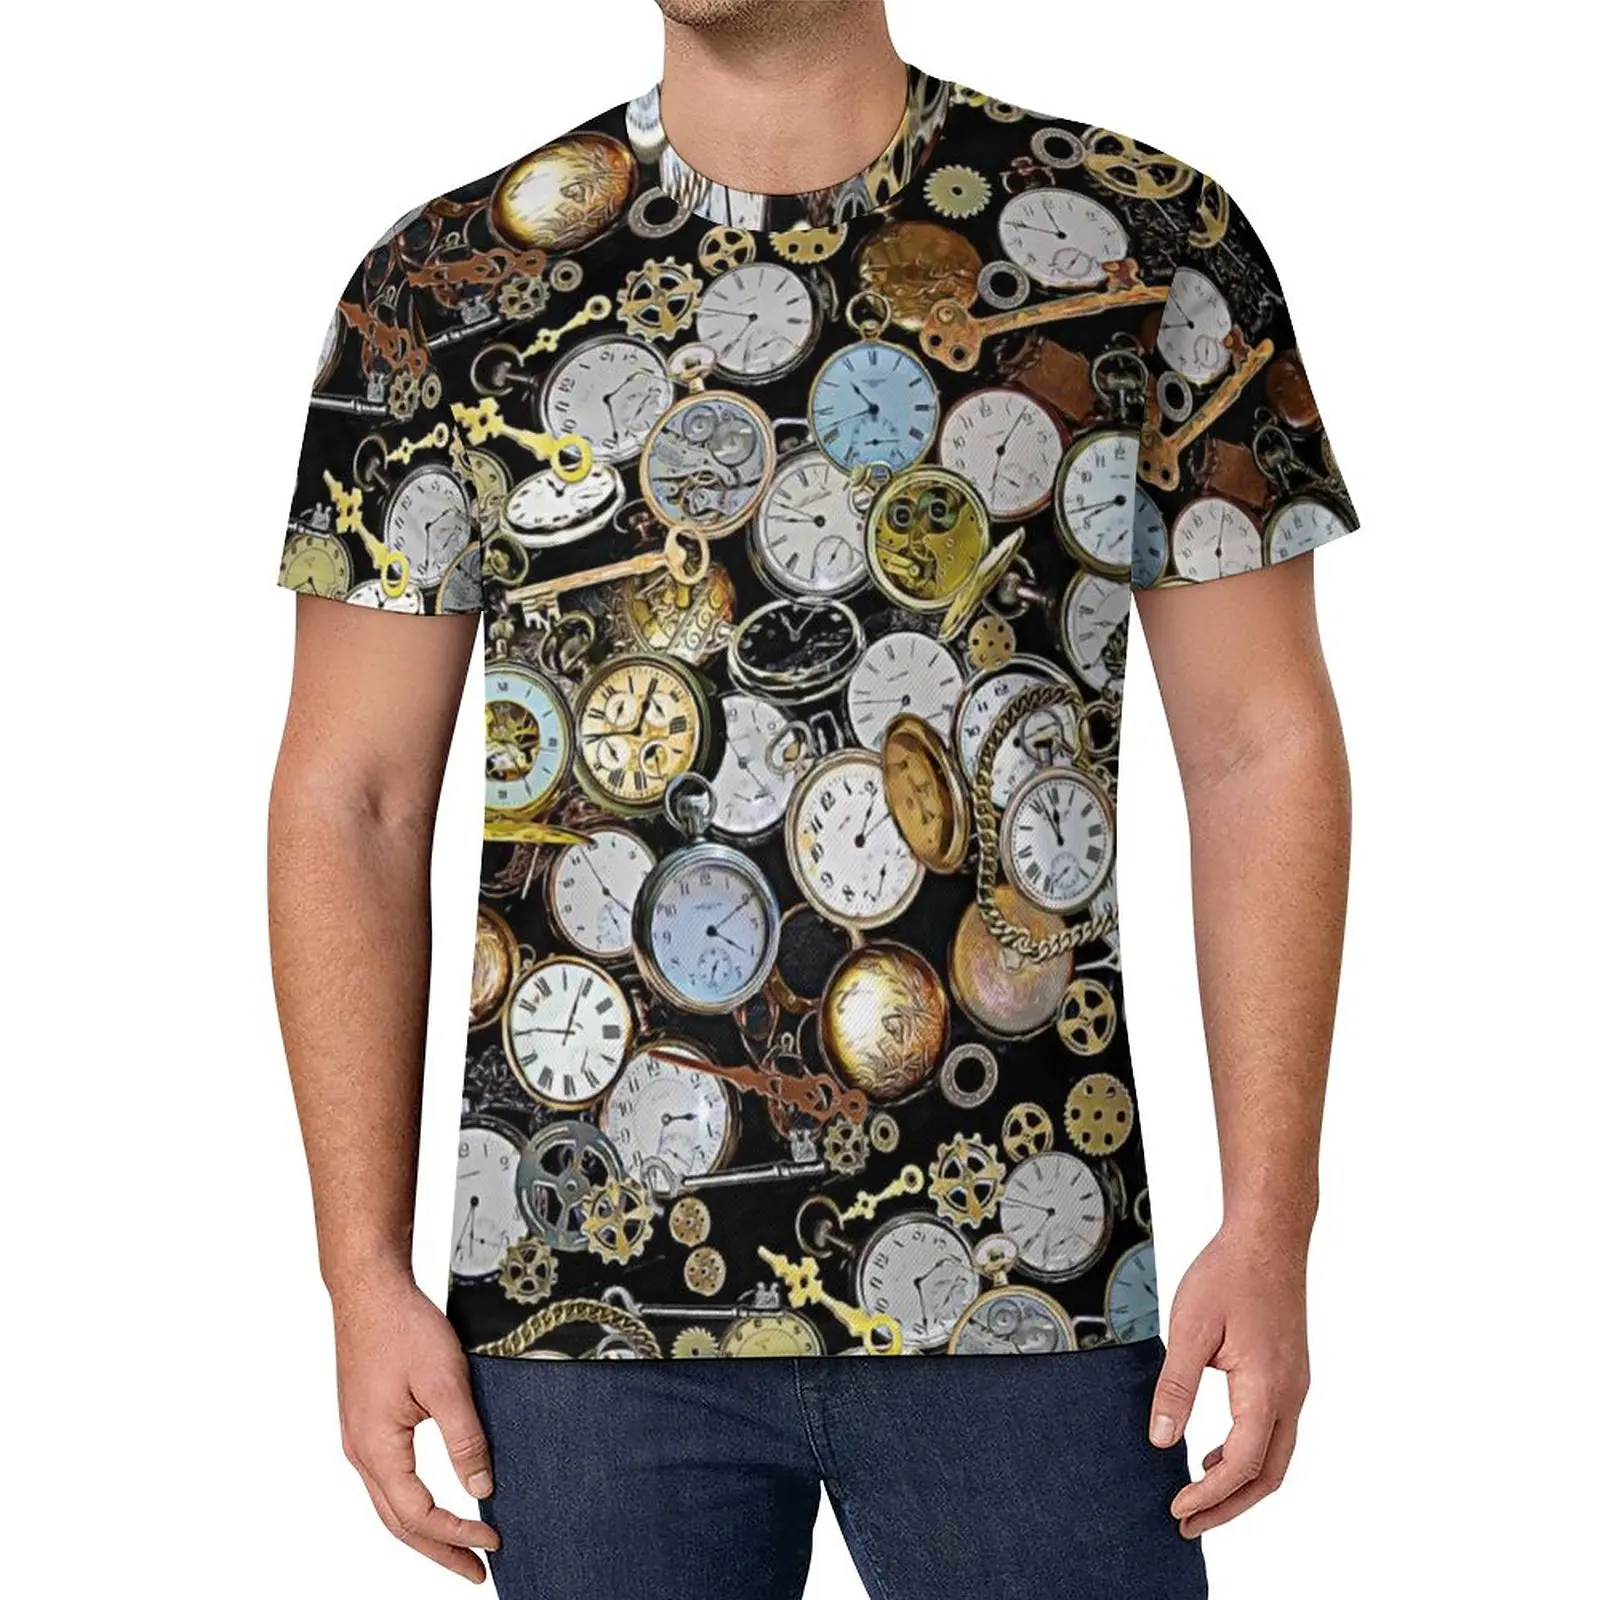 

Steampunk Themed Pocket T-Shirt Men Watches Gears Clocks Retro Street Style T Shirts Summer Fashion Tee Shirt Graphic Plus Size